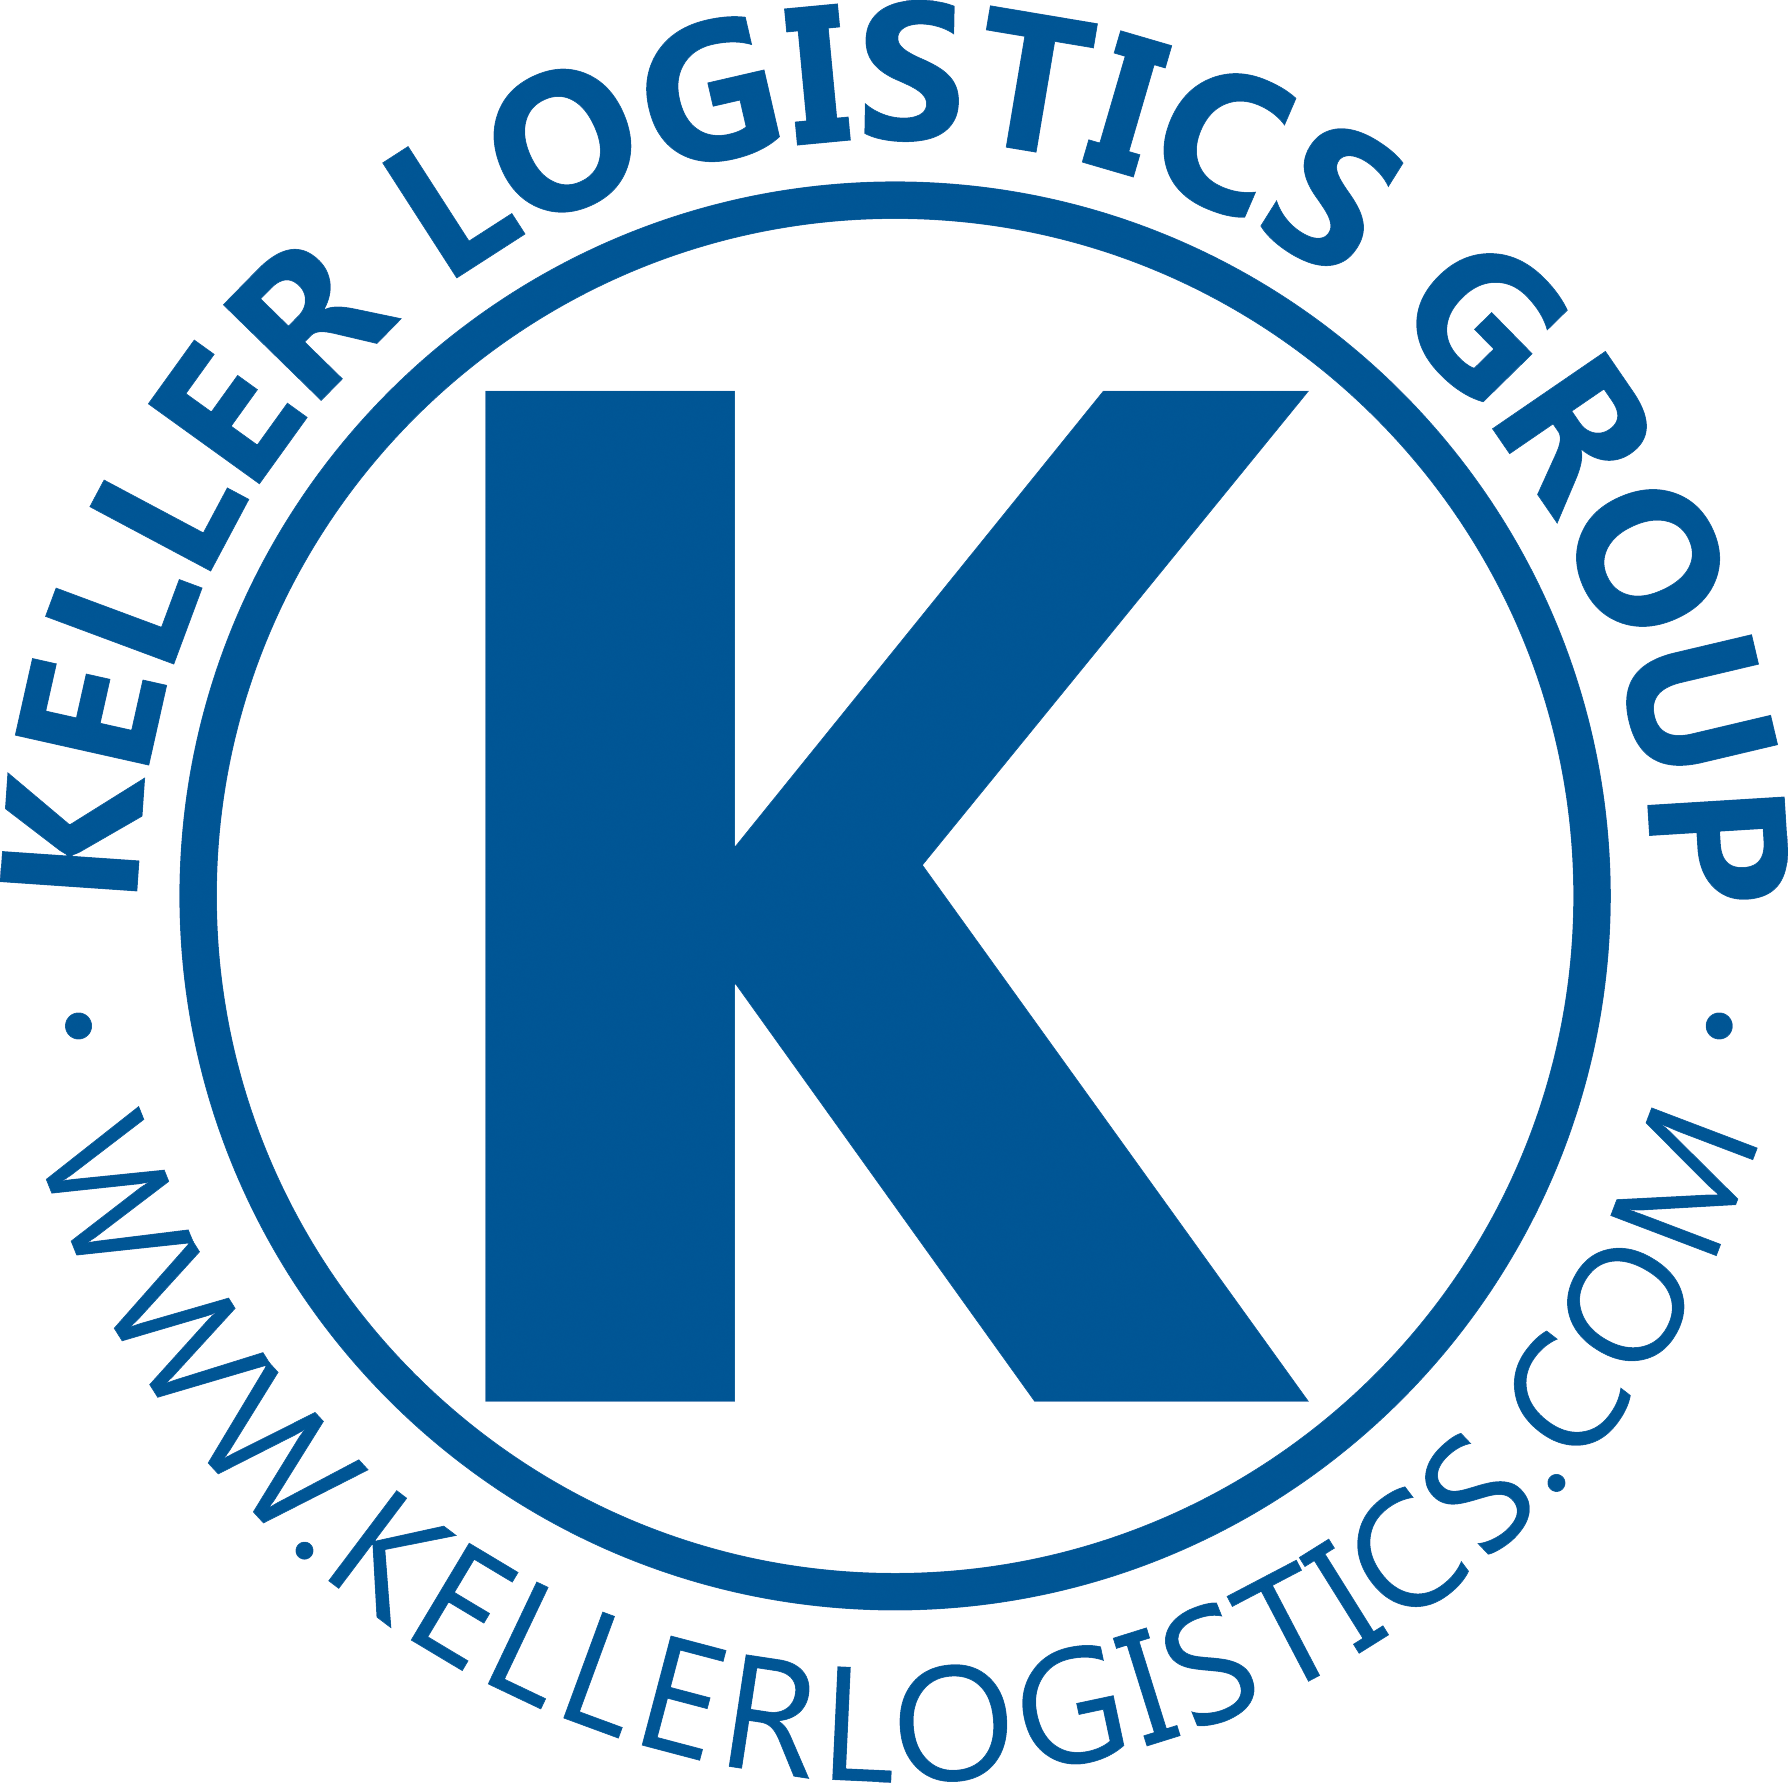 Keller Logistics logo